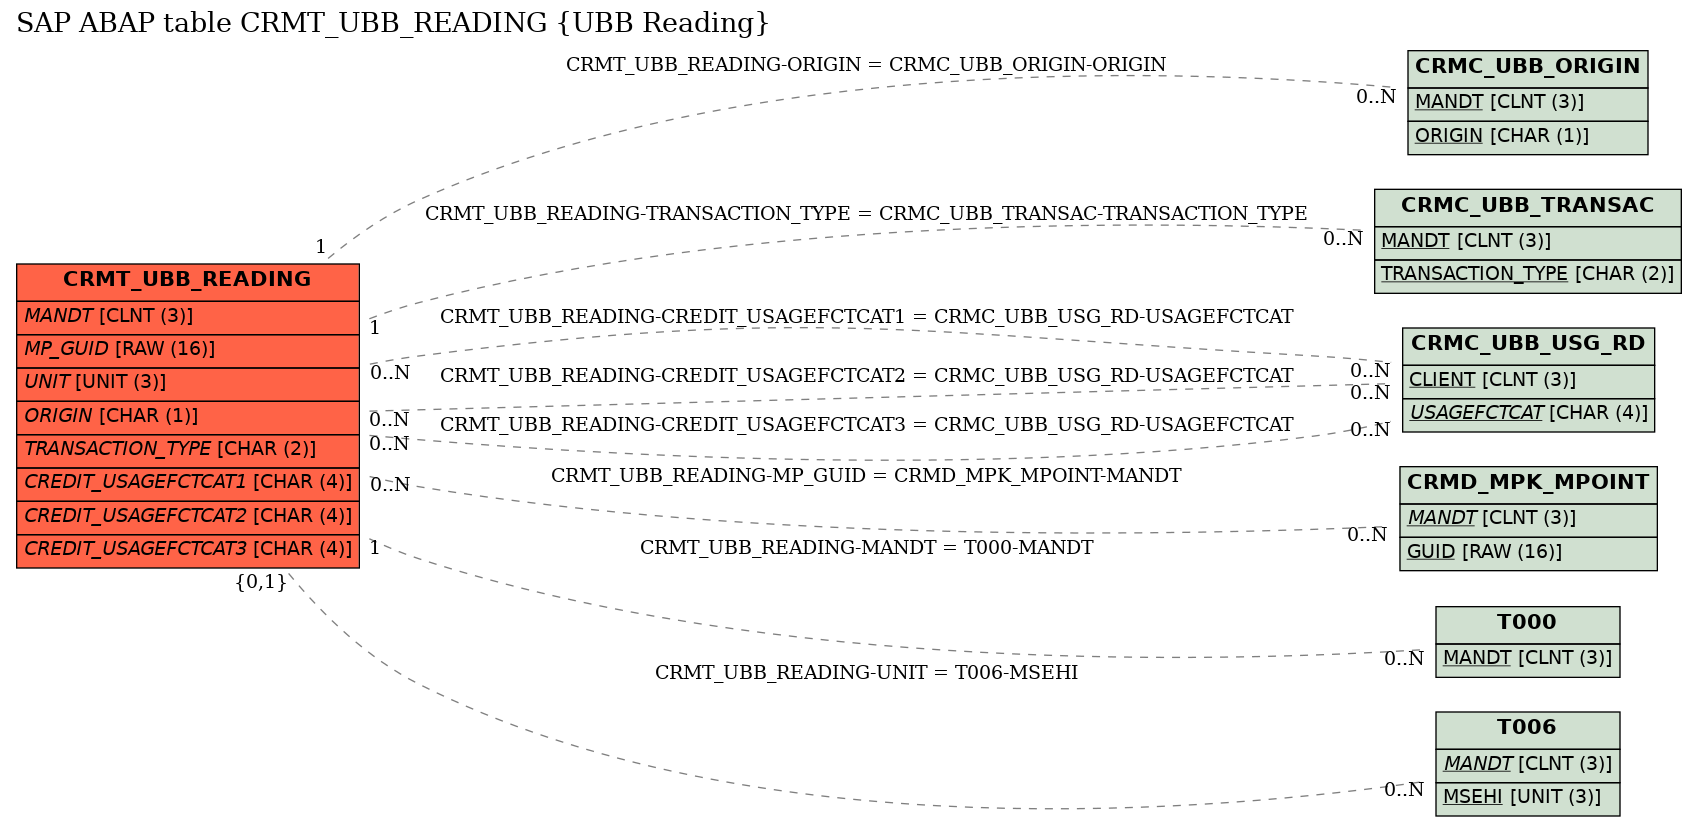 E-R Diagram for table CRMT_UBB_READING (UBB Reading)